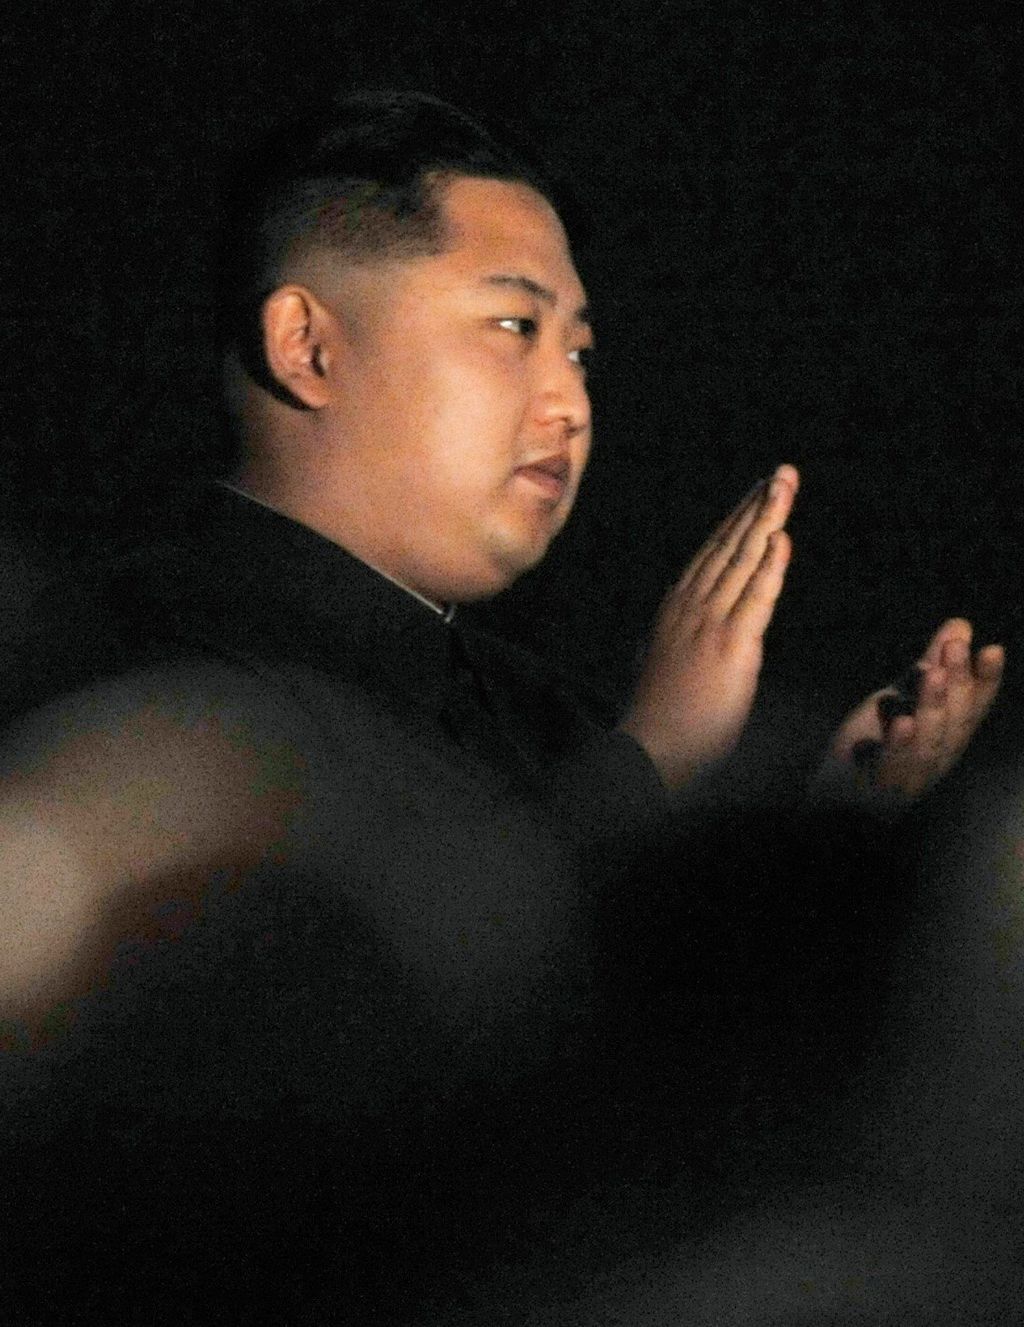 Korea: Kim-Čong-un přebírá vládu od Kim-Čong-ila